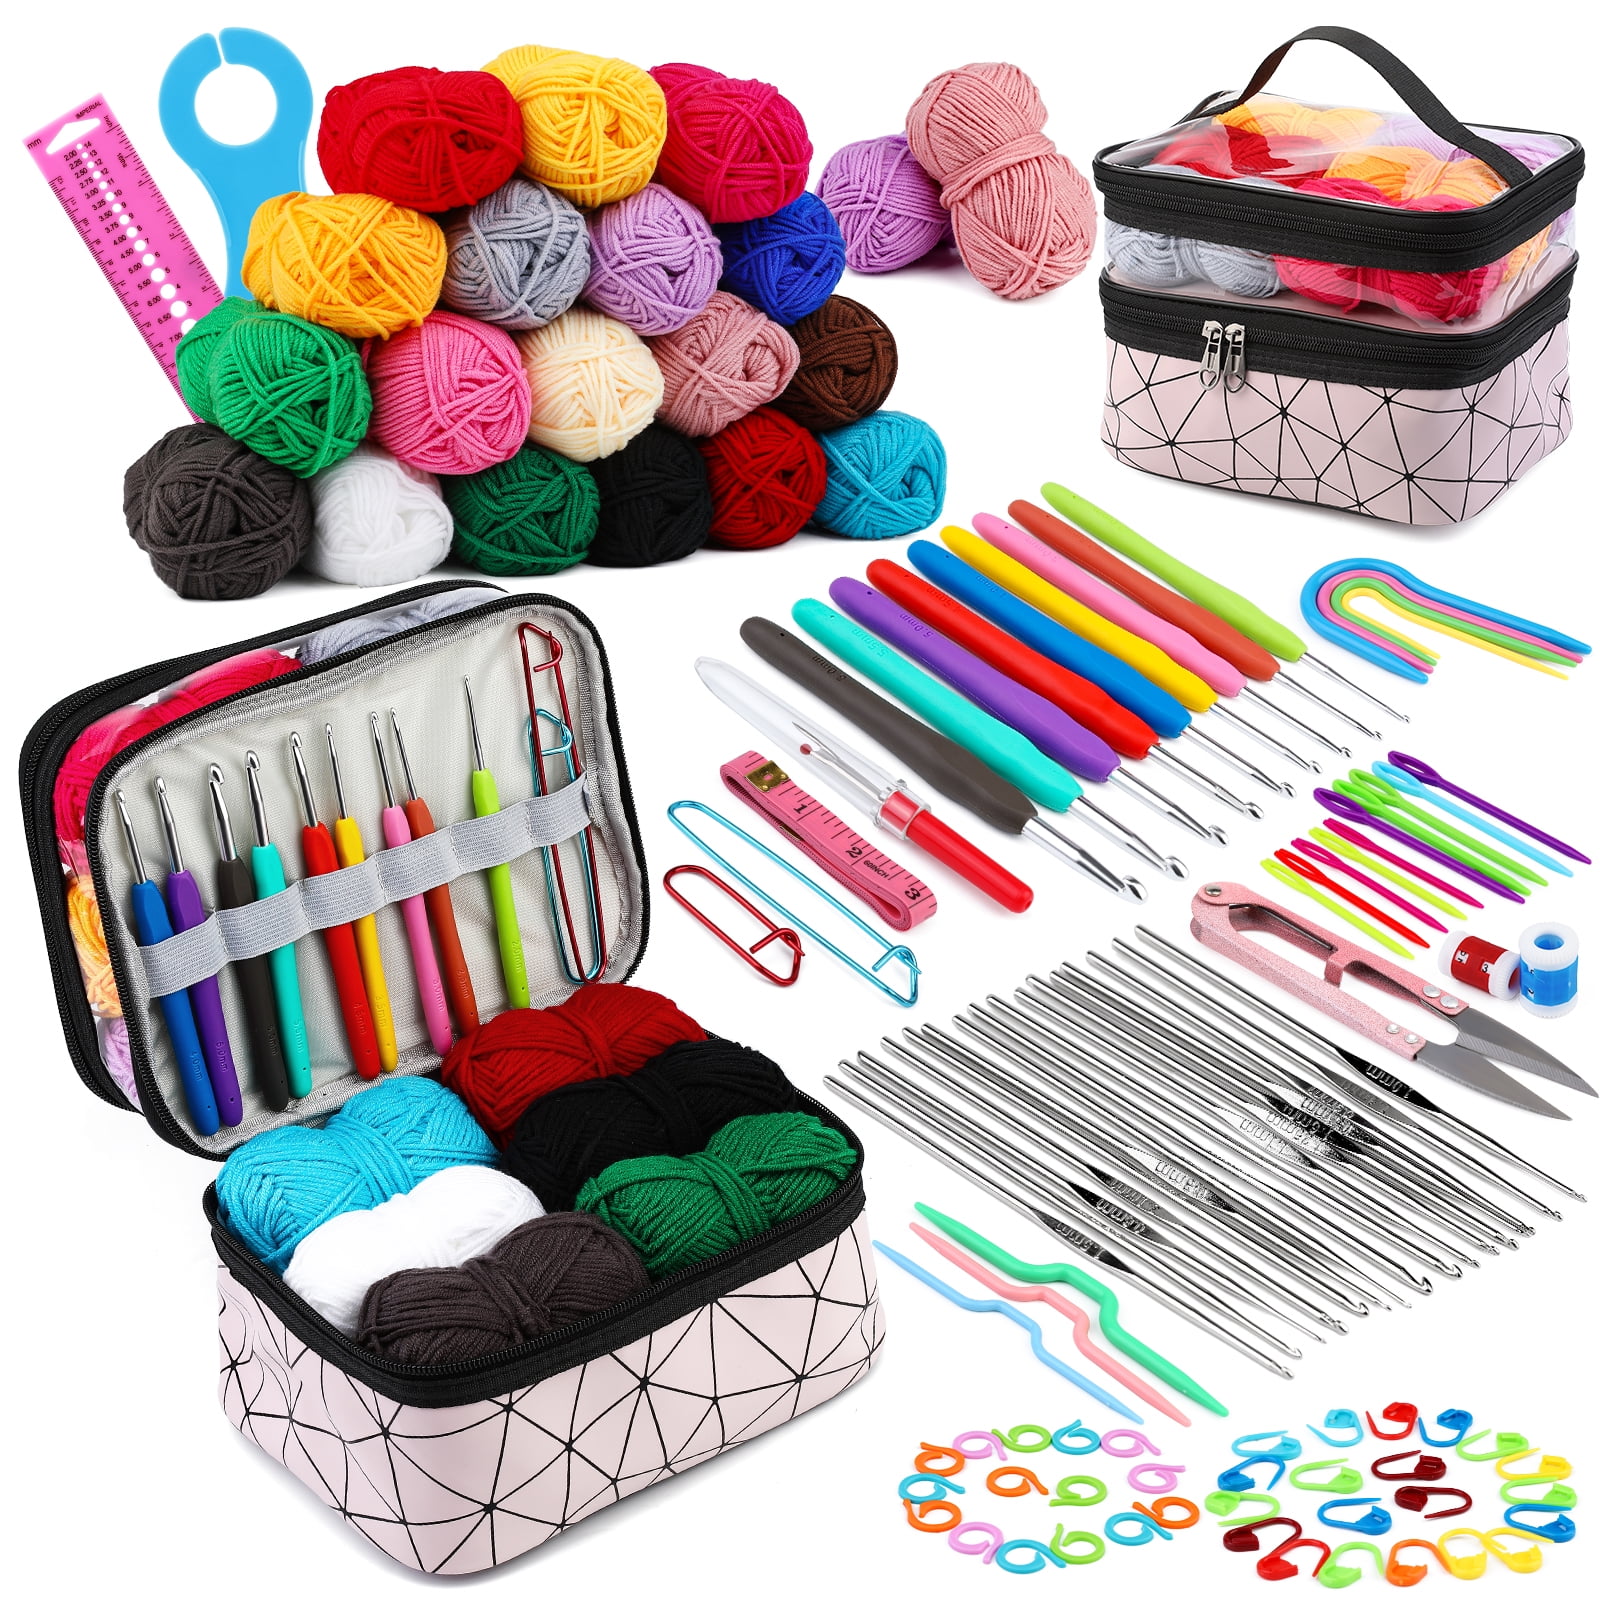 KRABALL Crochet Hook Yarn Ball Kit With Canvas Tote Bag and Knitting &  Crochet Knit Accessories for Crochet Set Beginner Lovers